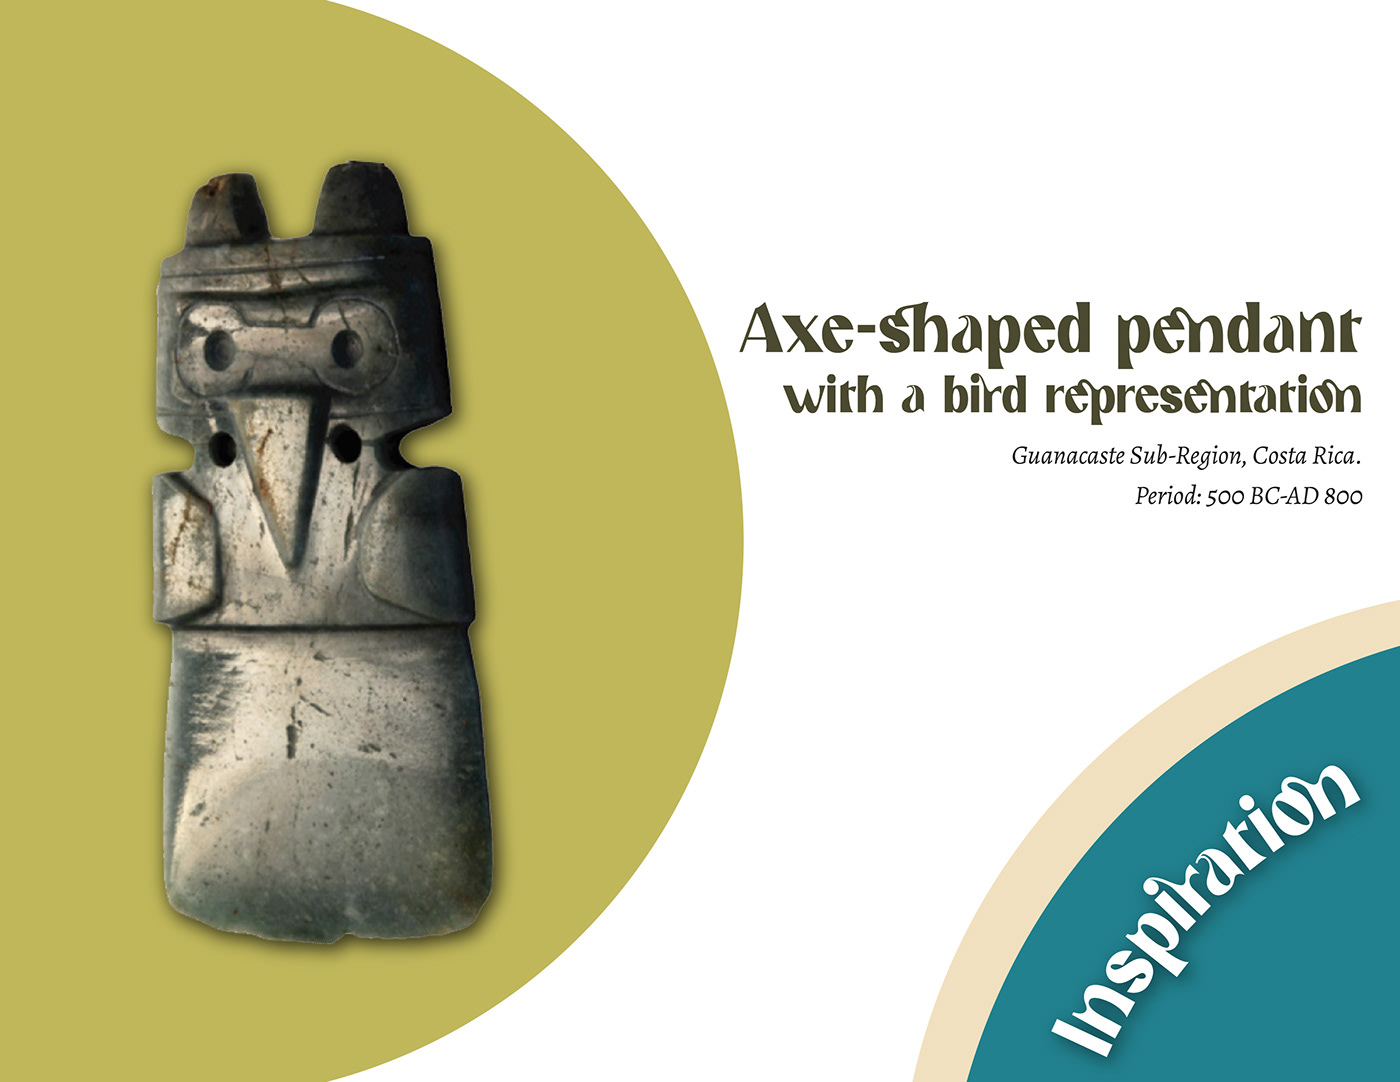 culture jade keychain llavero merchandising museo museum precolumbian souvenir usb flash drive